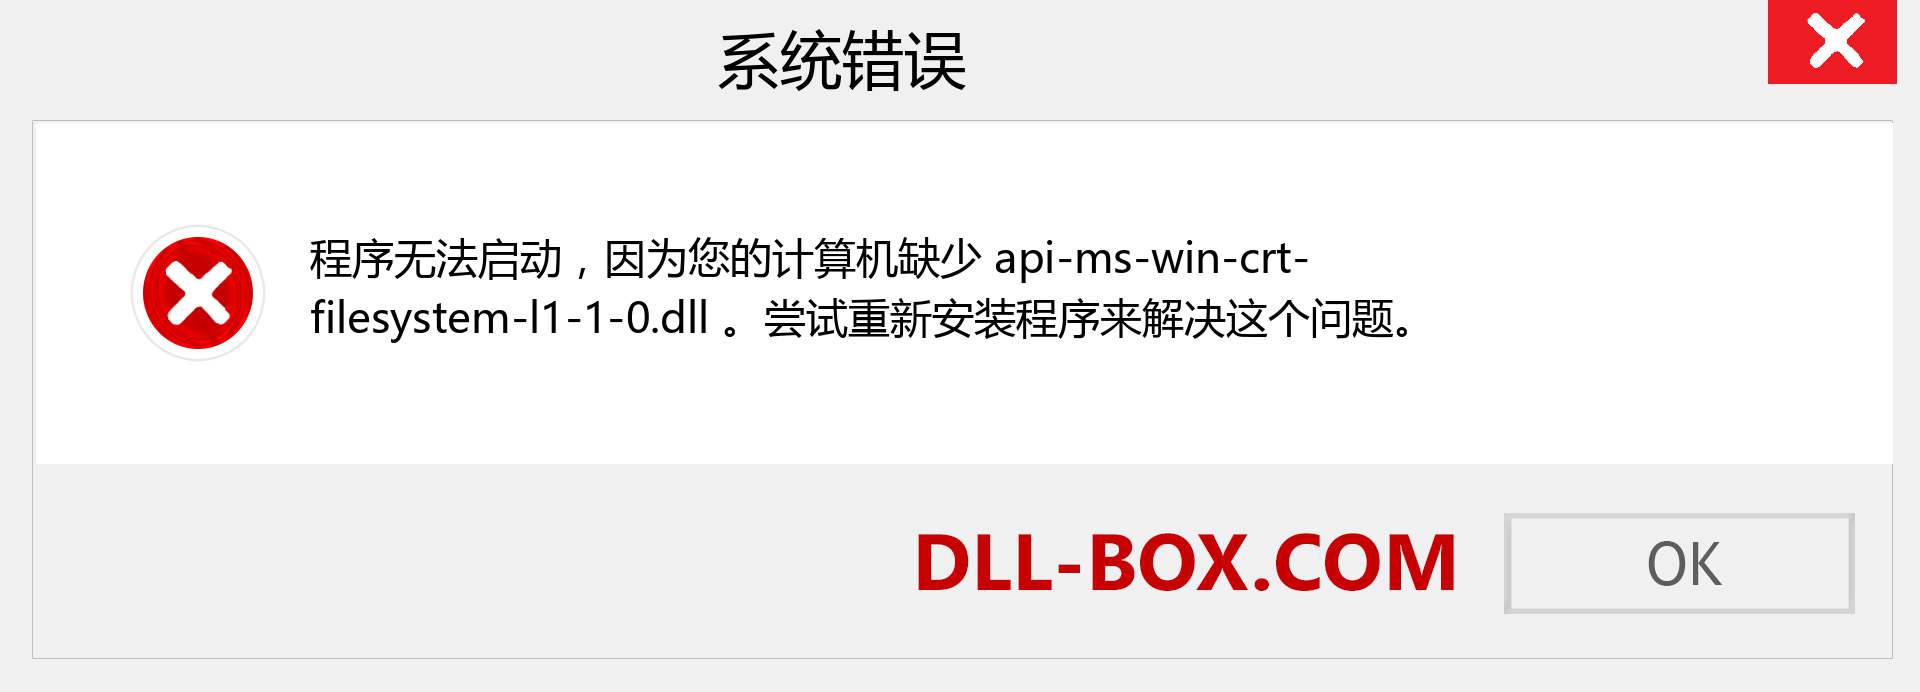 api-ms-win-crt-filesystem-l1-1-0.dll 文件丢失？。 适用于 Windows 7、8、10 的下载 - 修复 Windows、照片、图像上的 api-ms-win-crt-filesystem-l1-1-0 dll 丢失错误